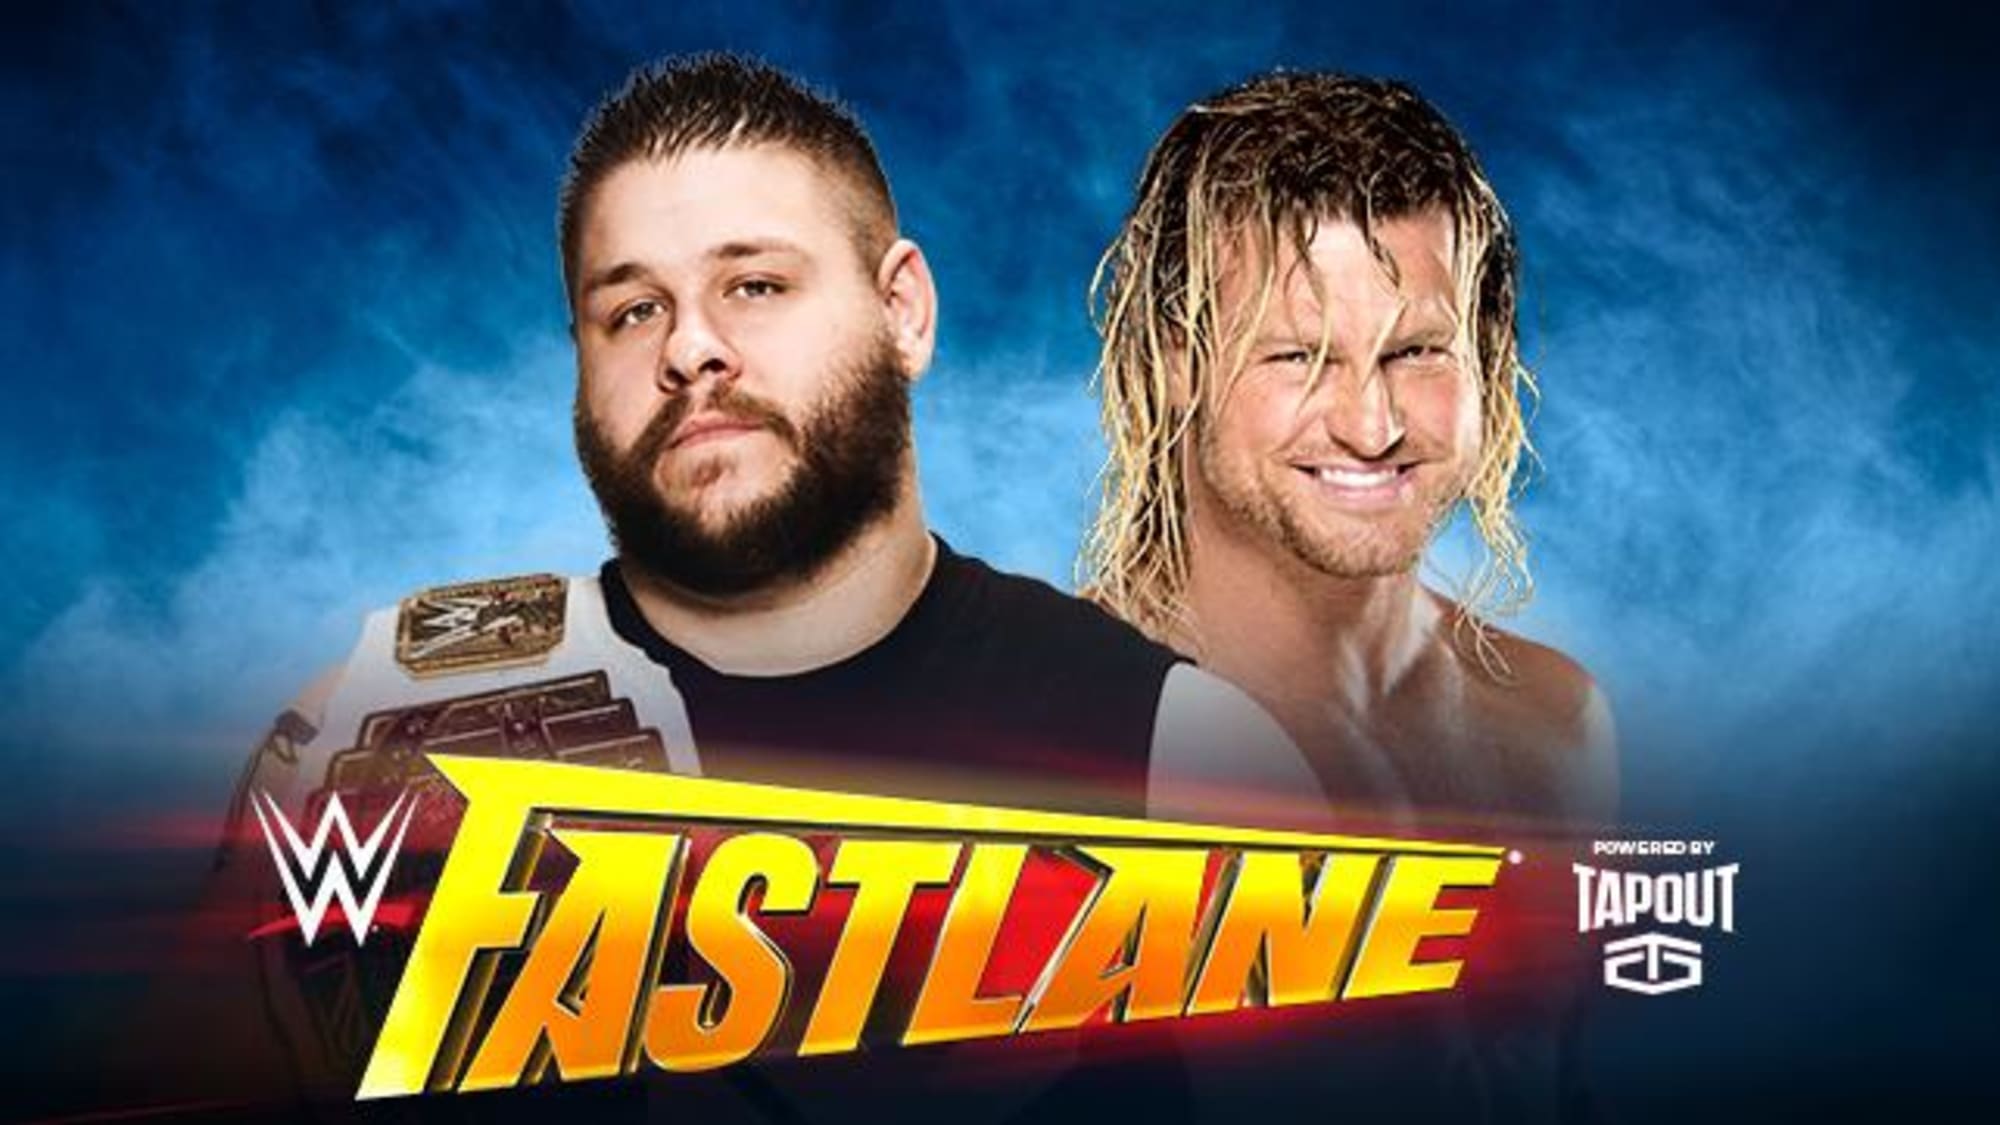 WWE Fastlane 2016 Full match card